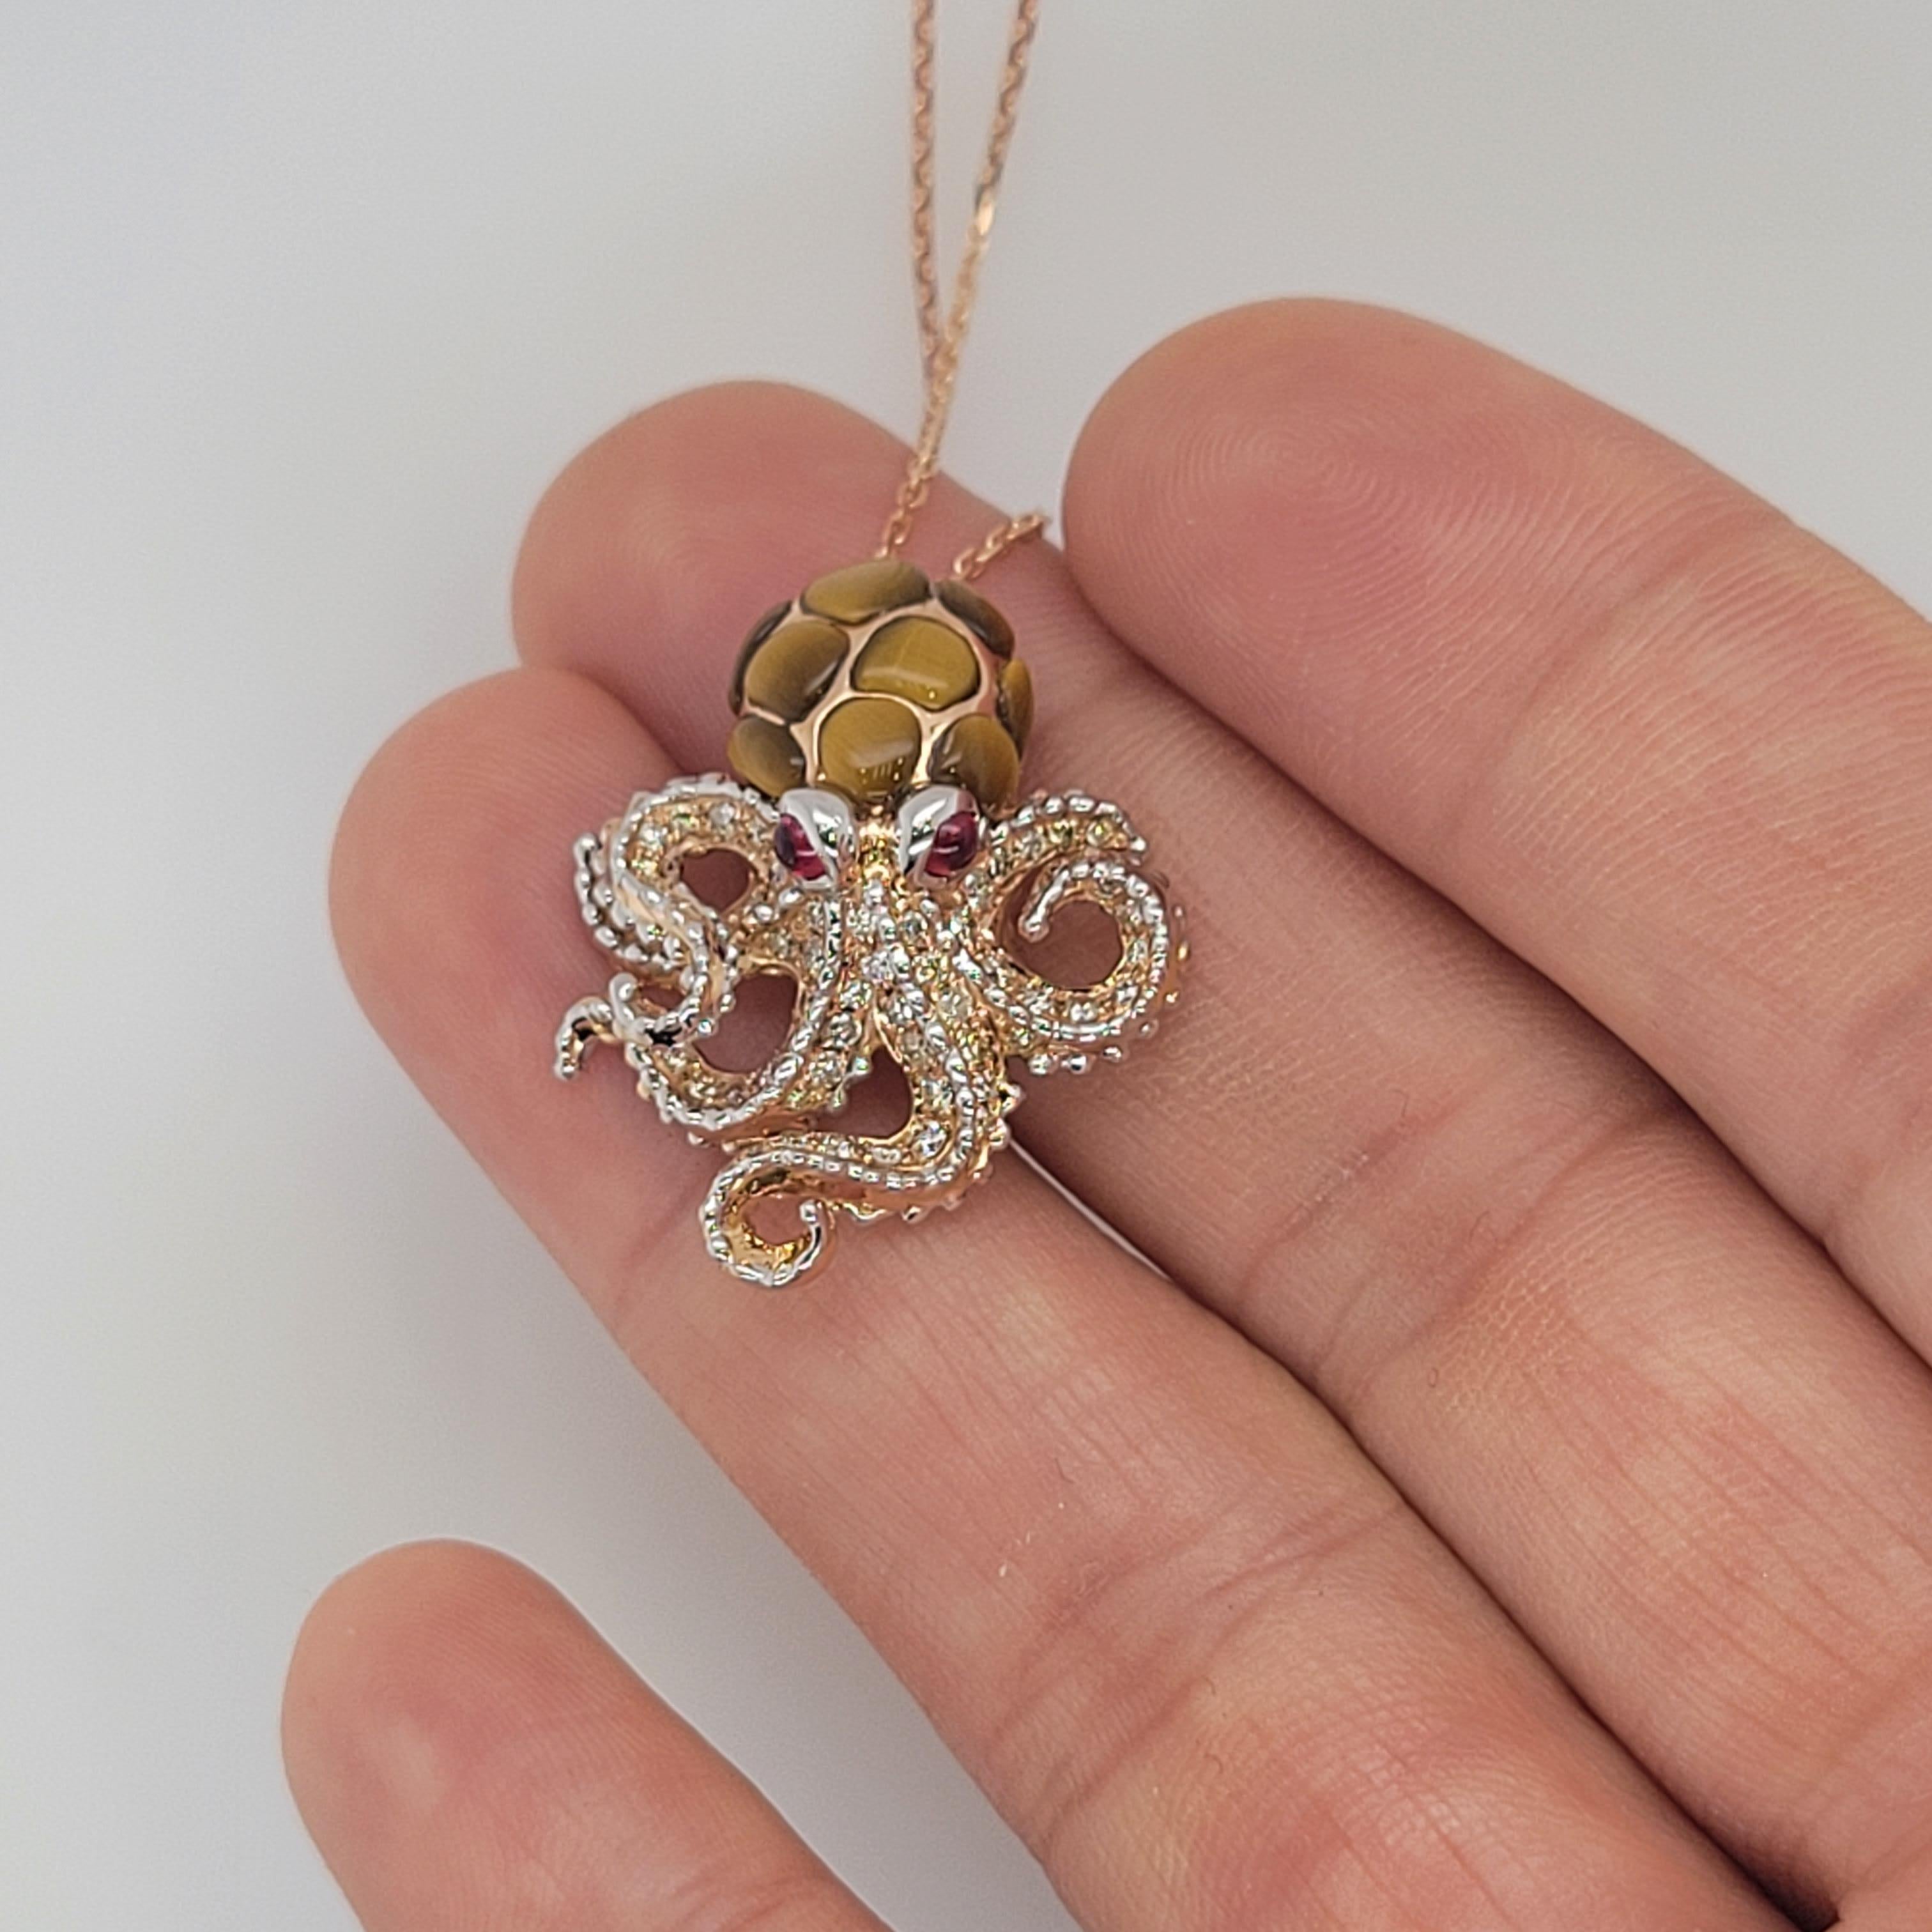 gold octopus pendant